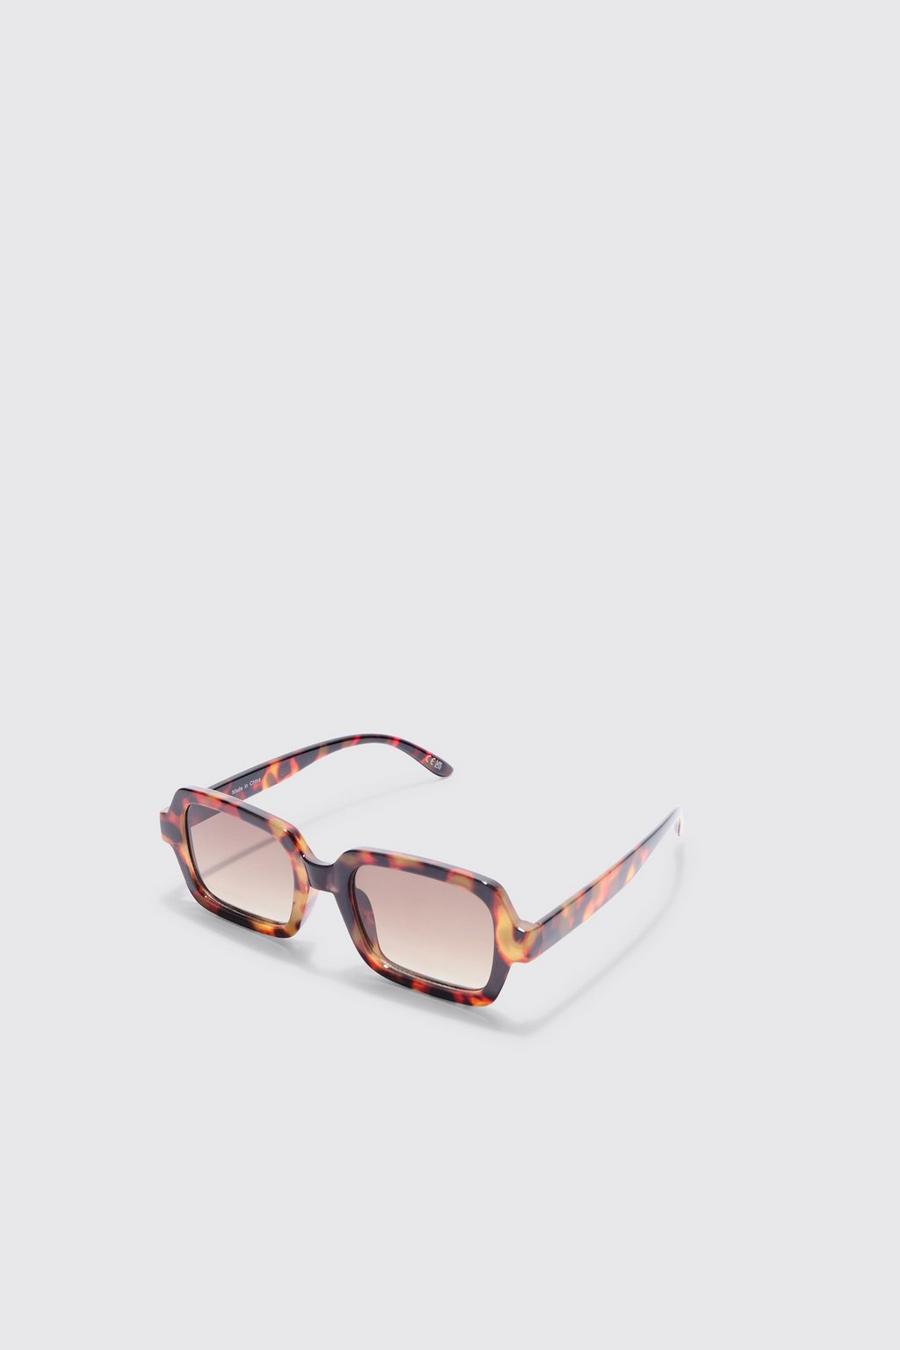 Brown tortoiseshell wayfarer sunglasses